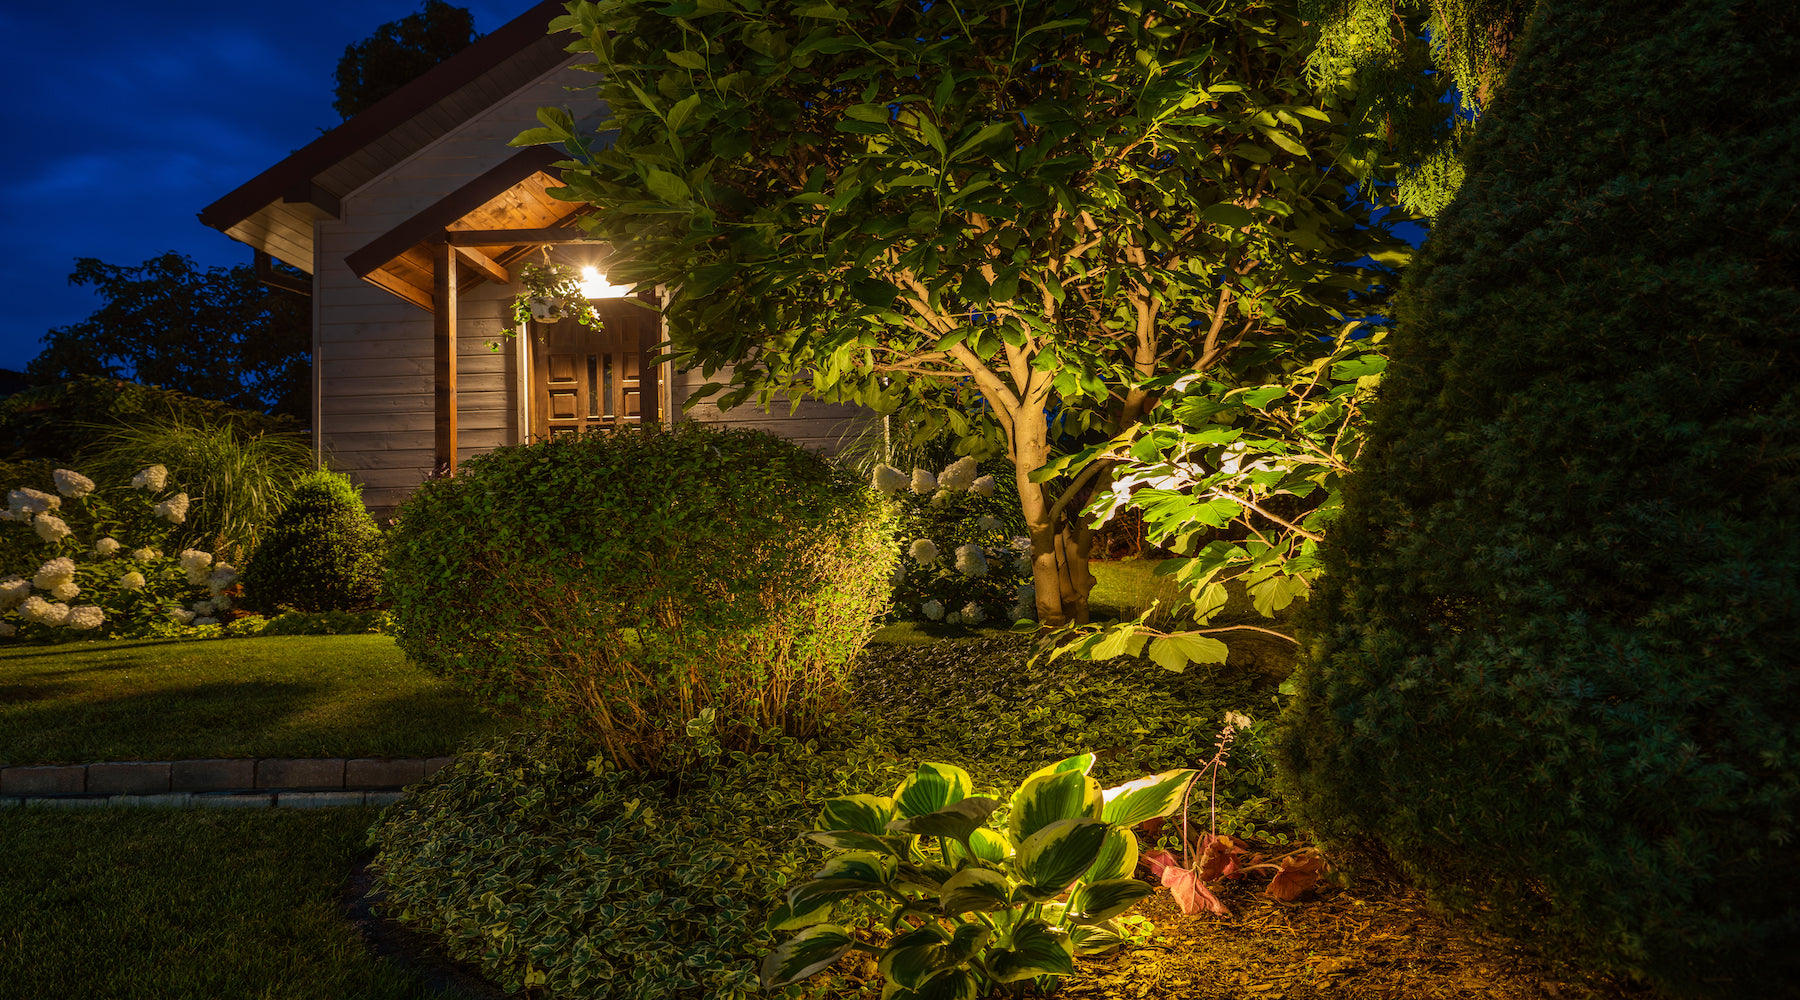 Yard Lighting | Outdoor Yard Light Fixtures and LED Yard Lights